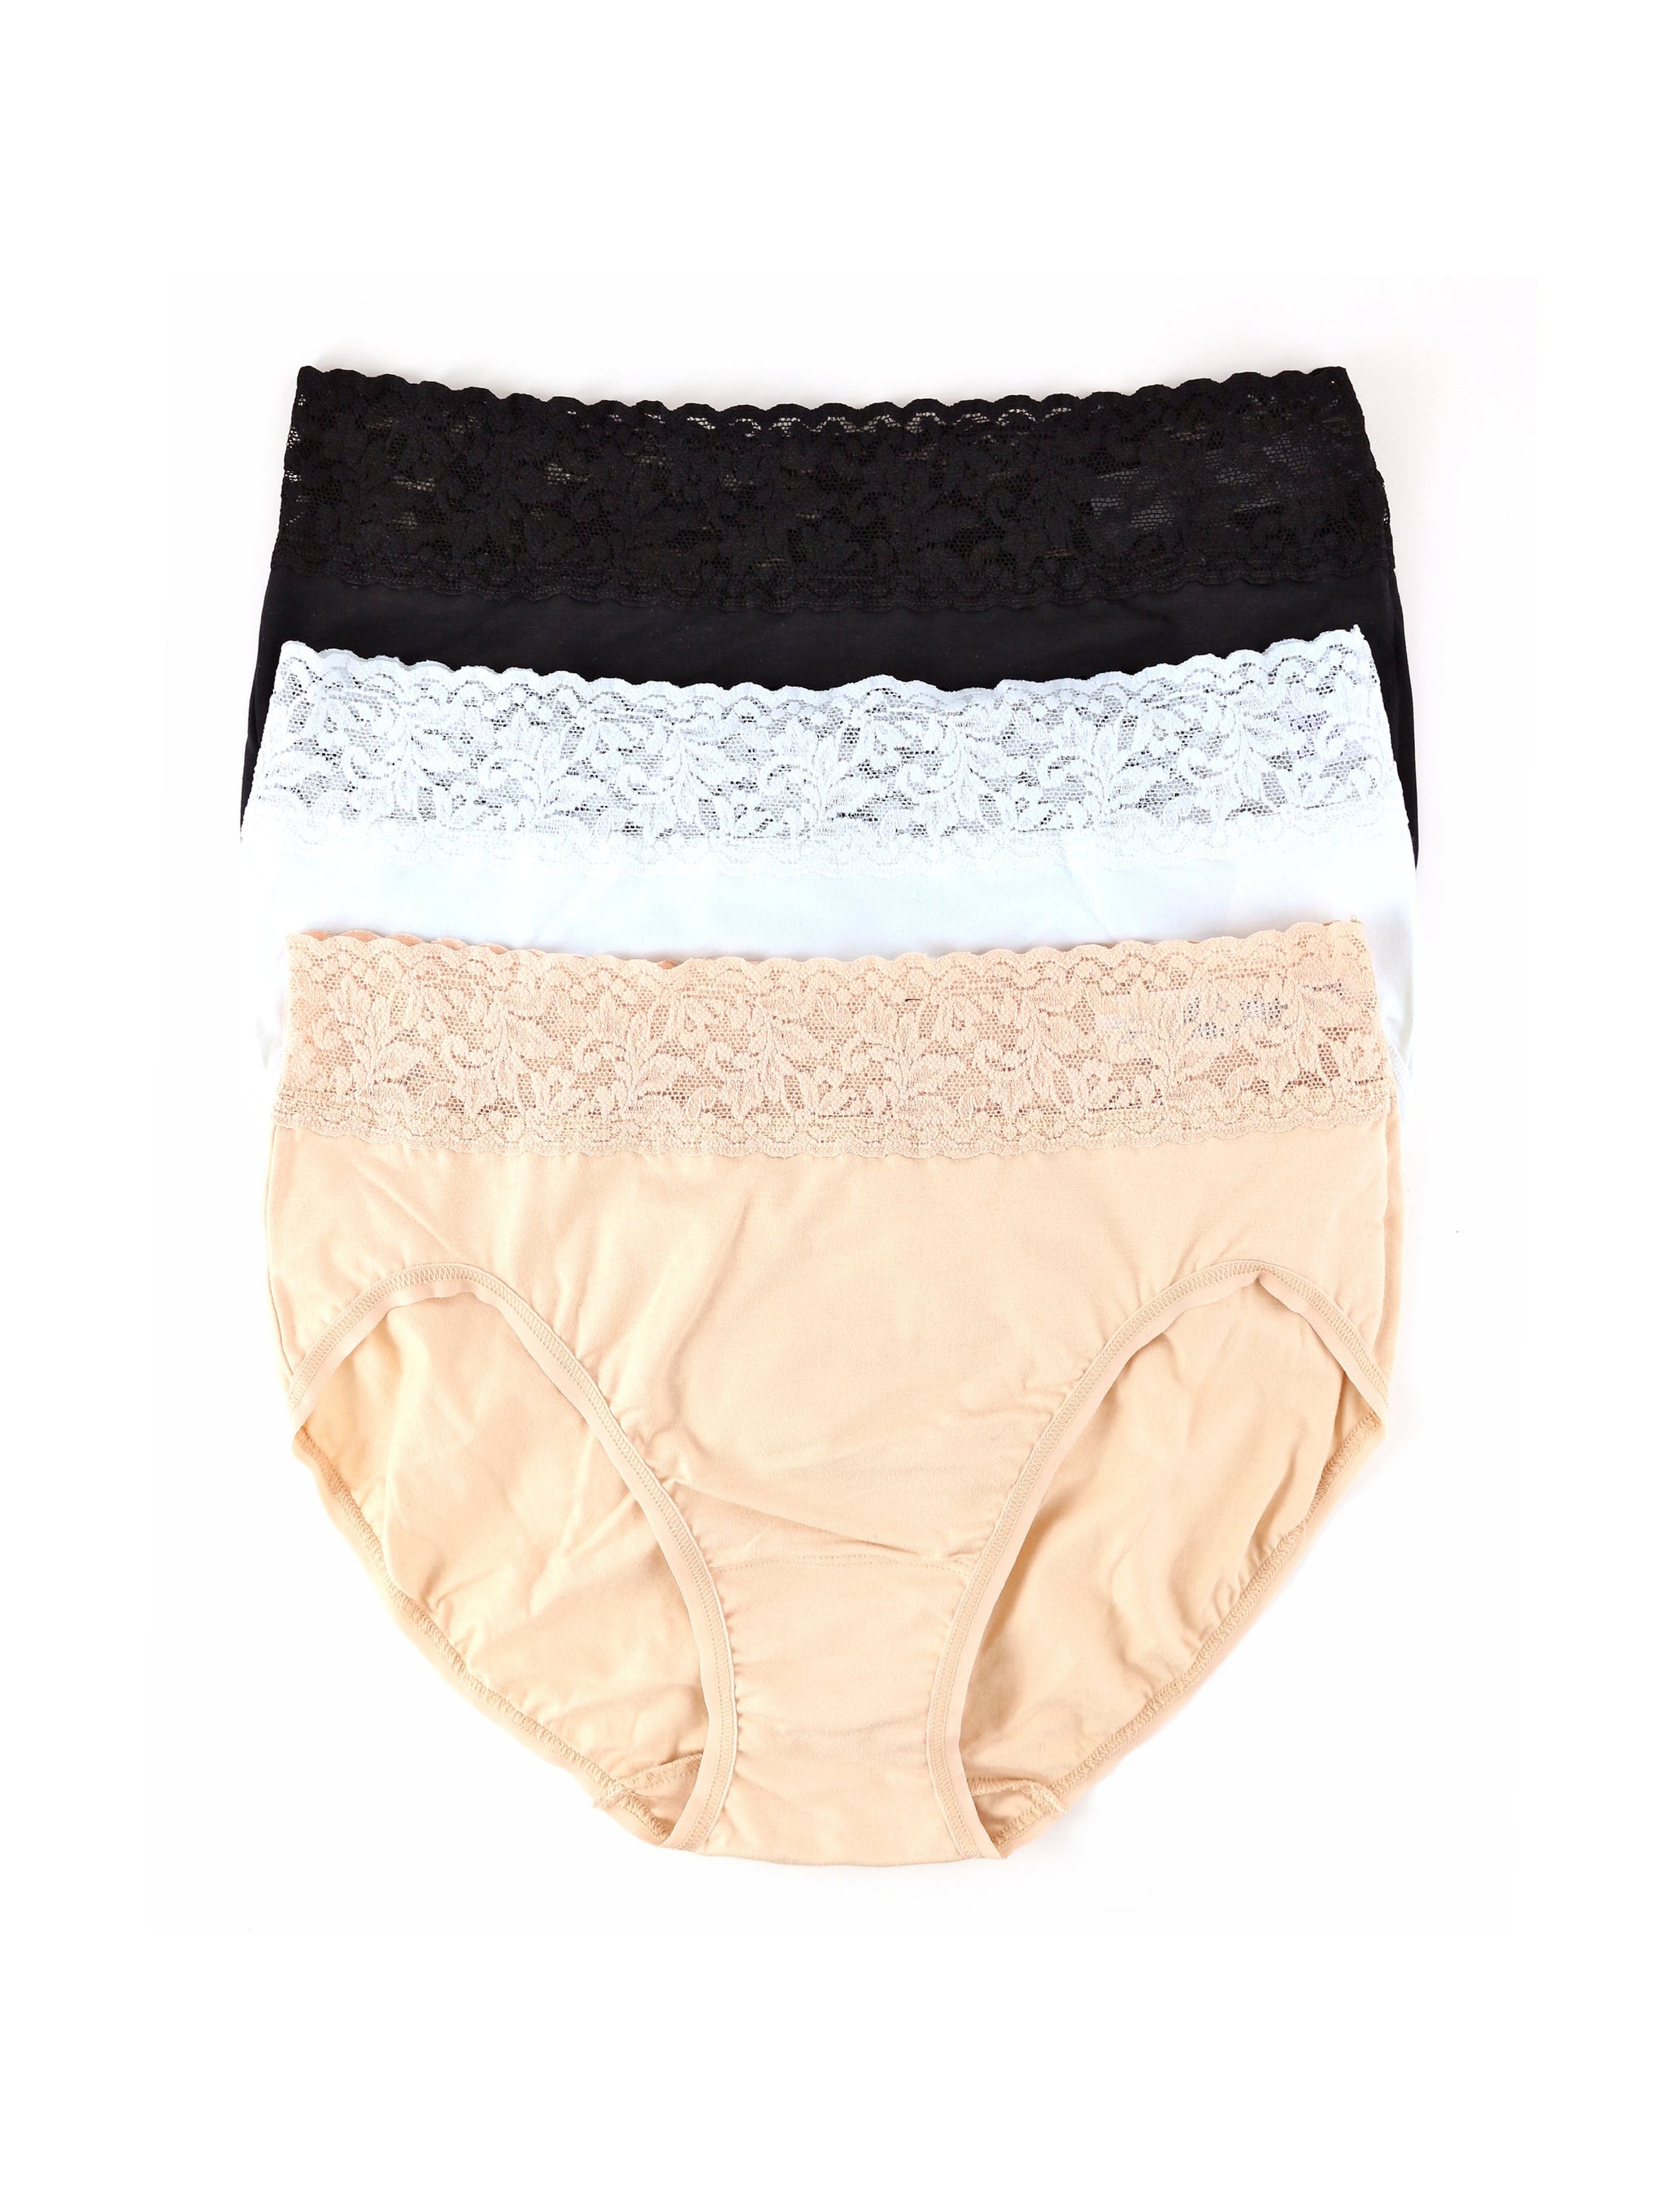 Buy women/underwear/brief Online in Seychelles at Low Prices at